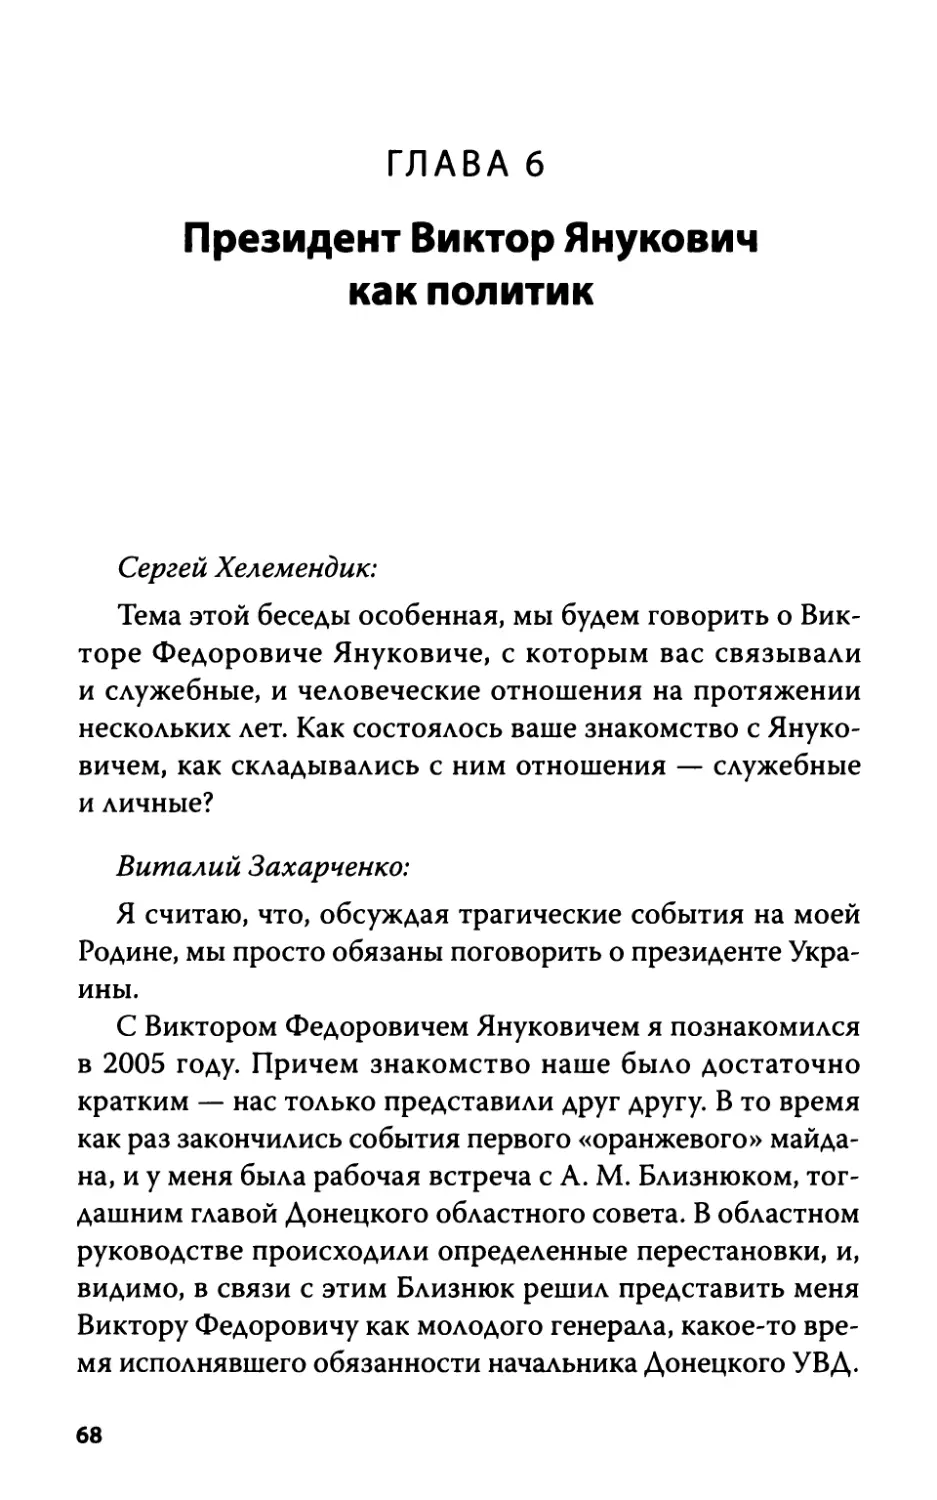 Глава 6. Президент Виктор Янукович как политик